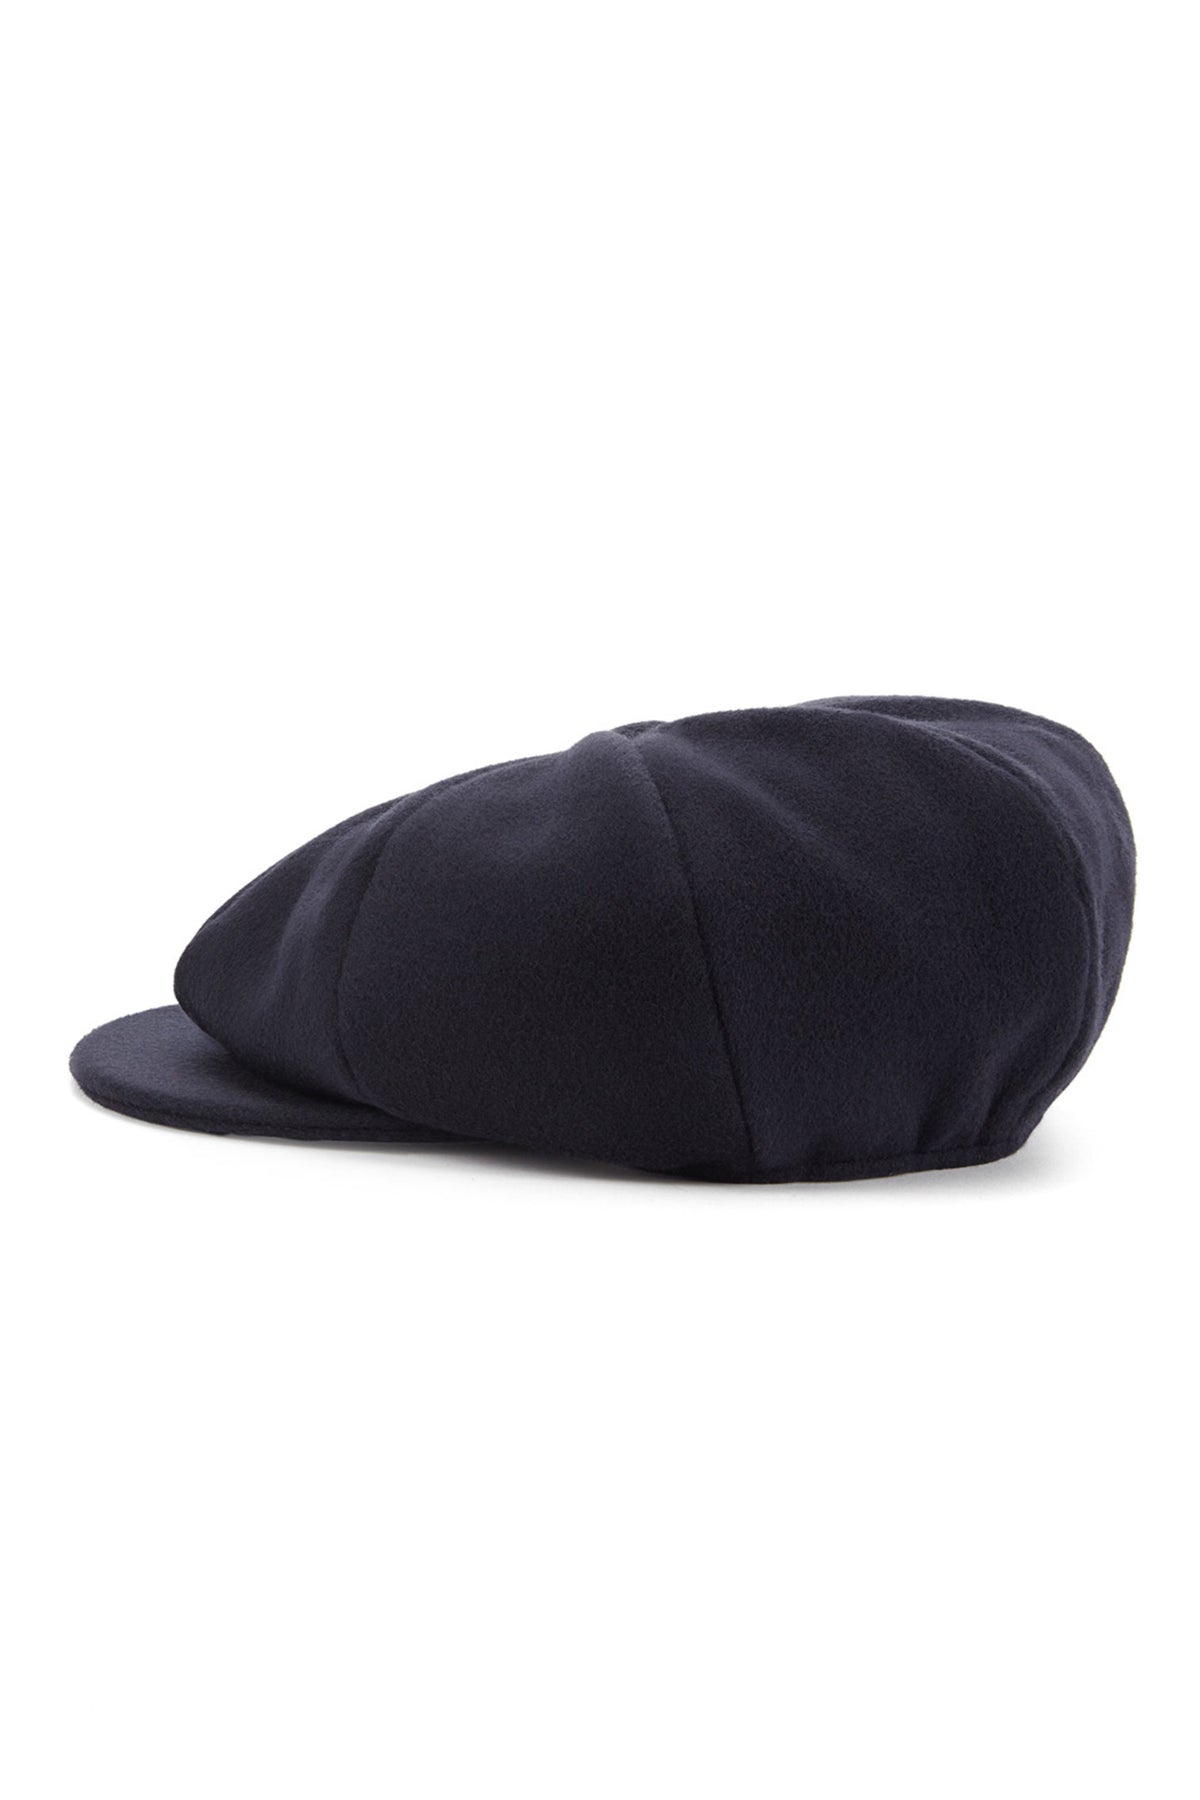 国産お得Lock&Co. MUIRFIELD TWEED BAKERBOY CAP 60 帽子